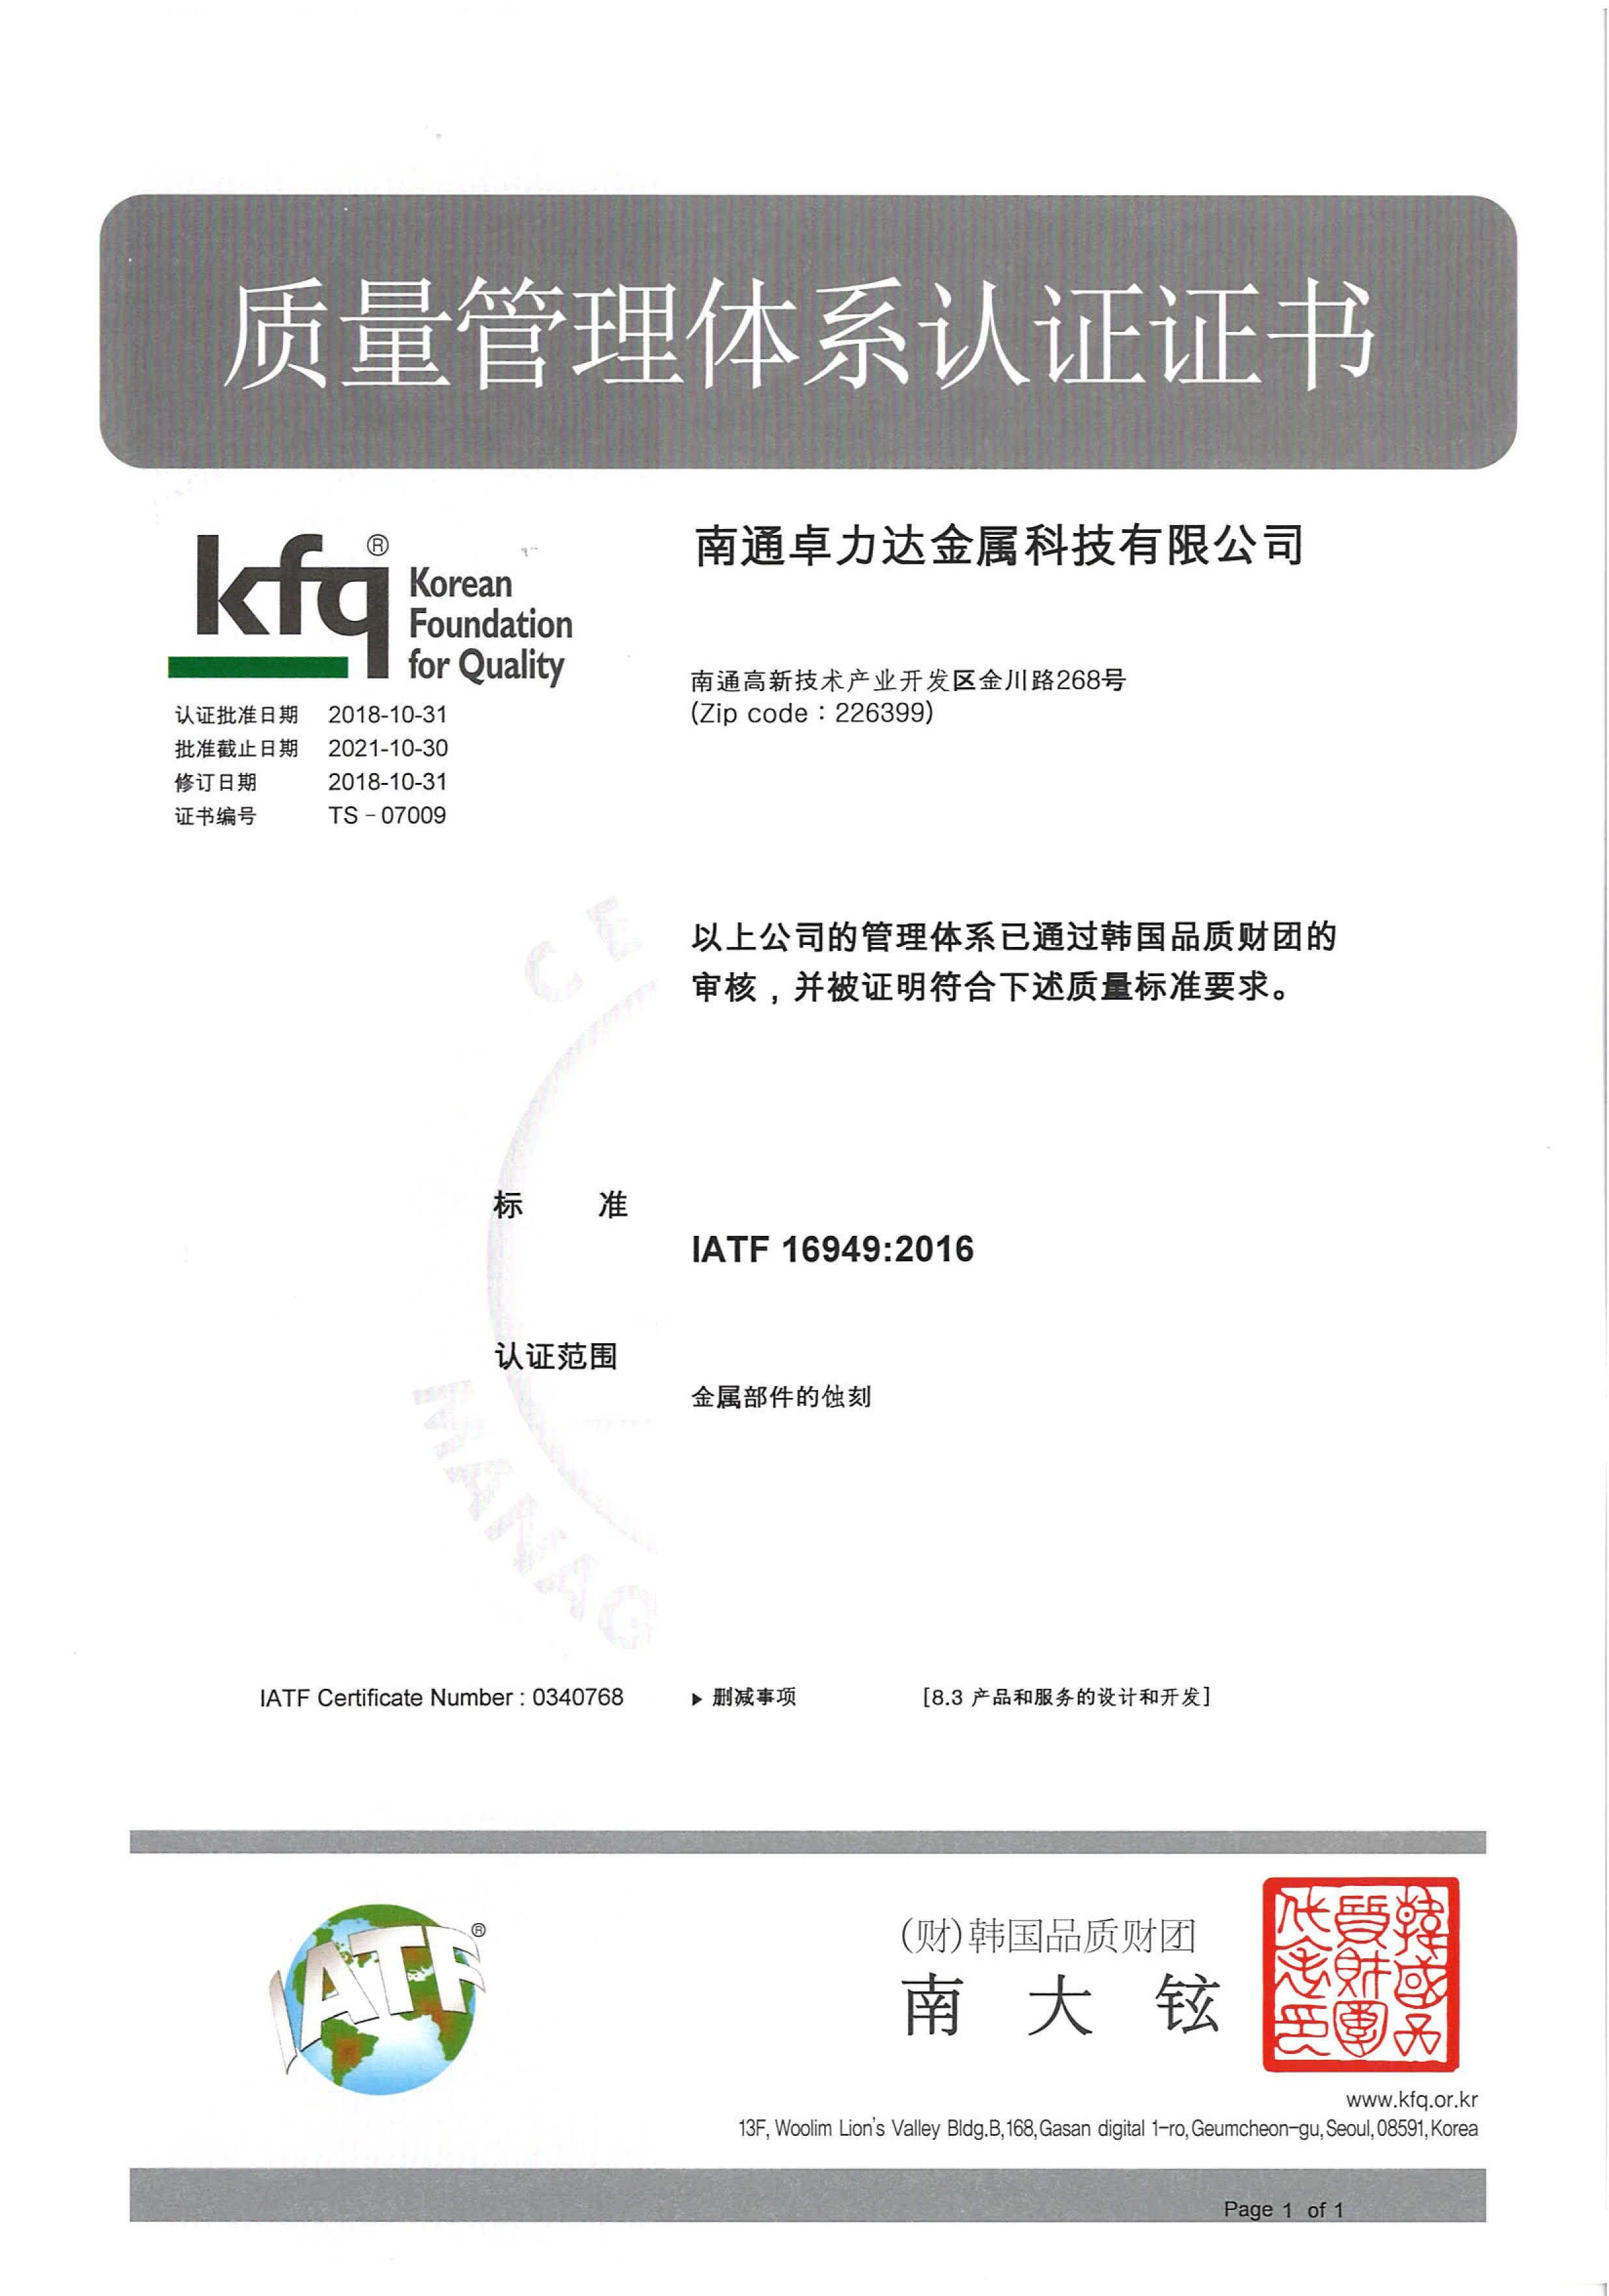 IATF 16949 quality management system certification